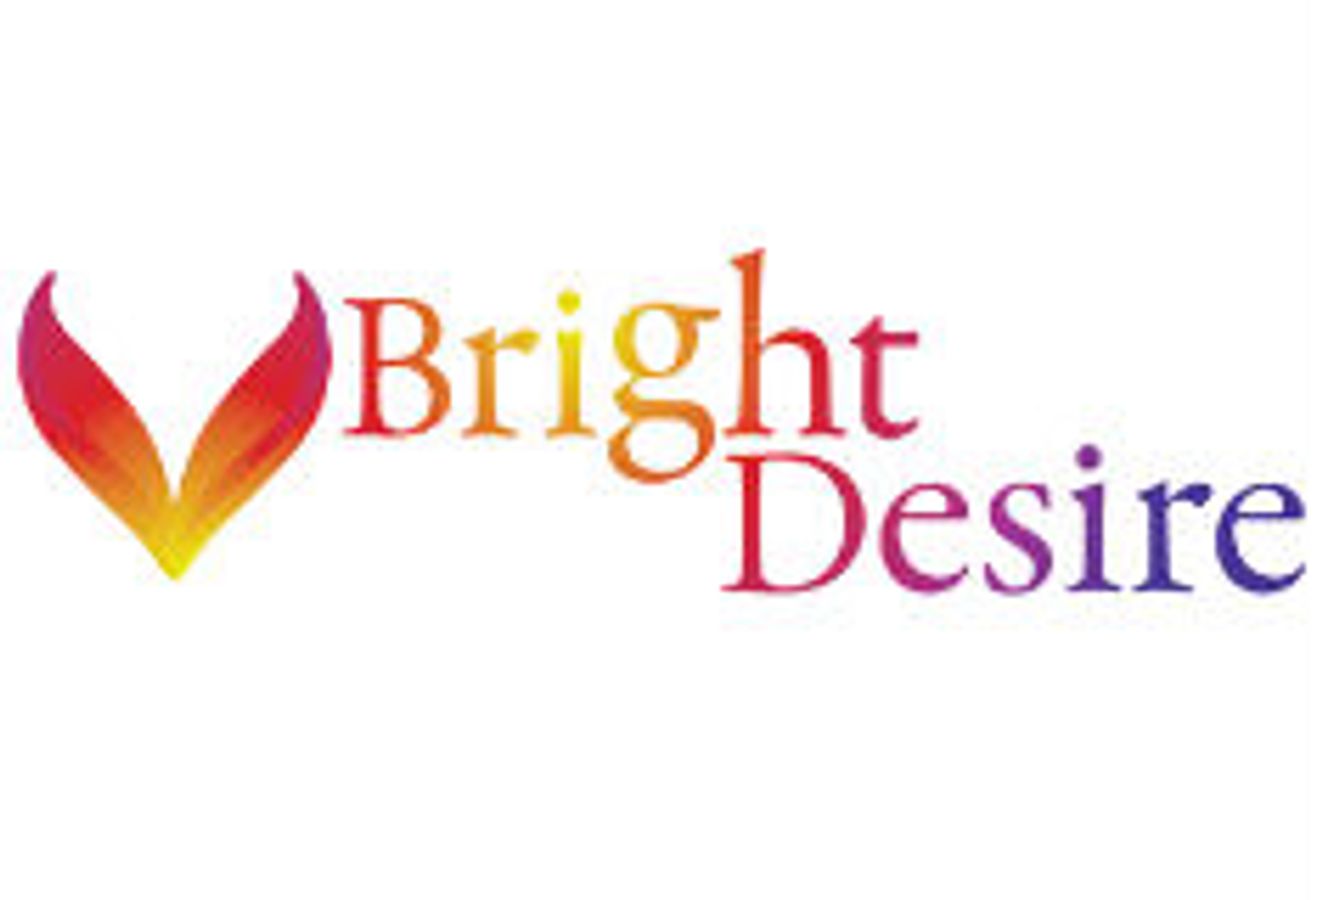 BrightDesire.com